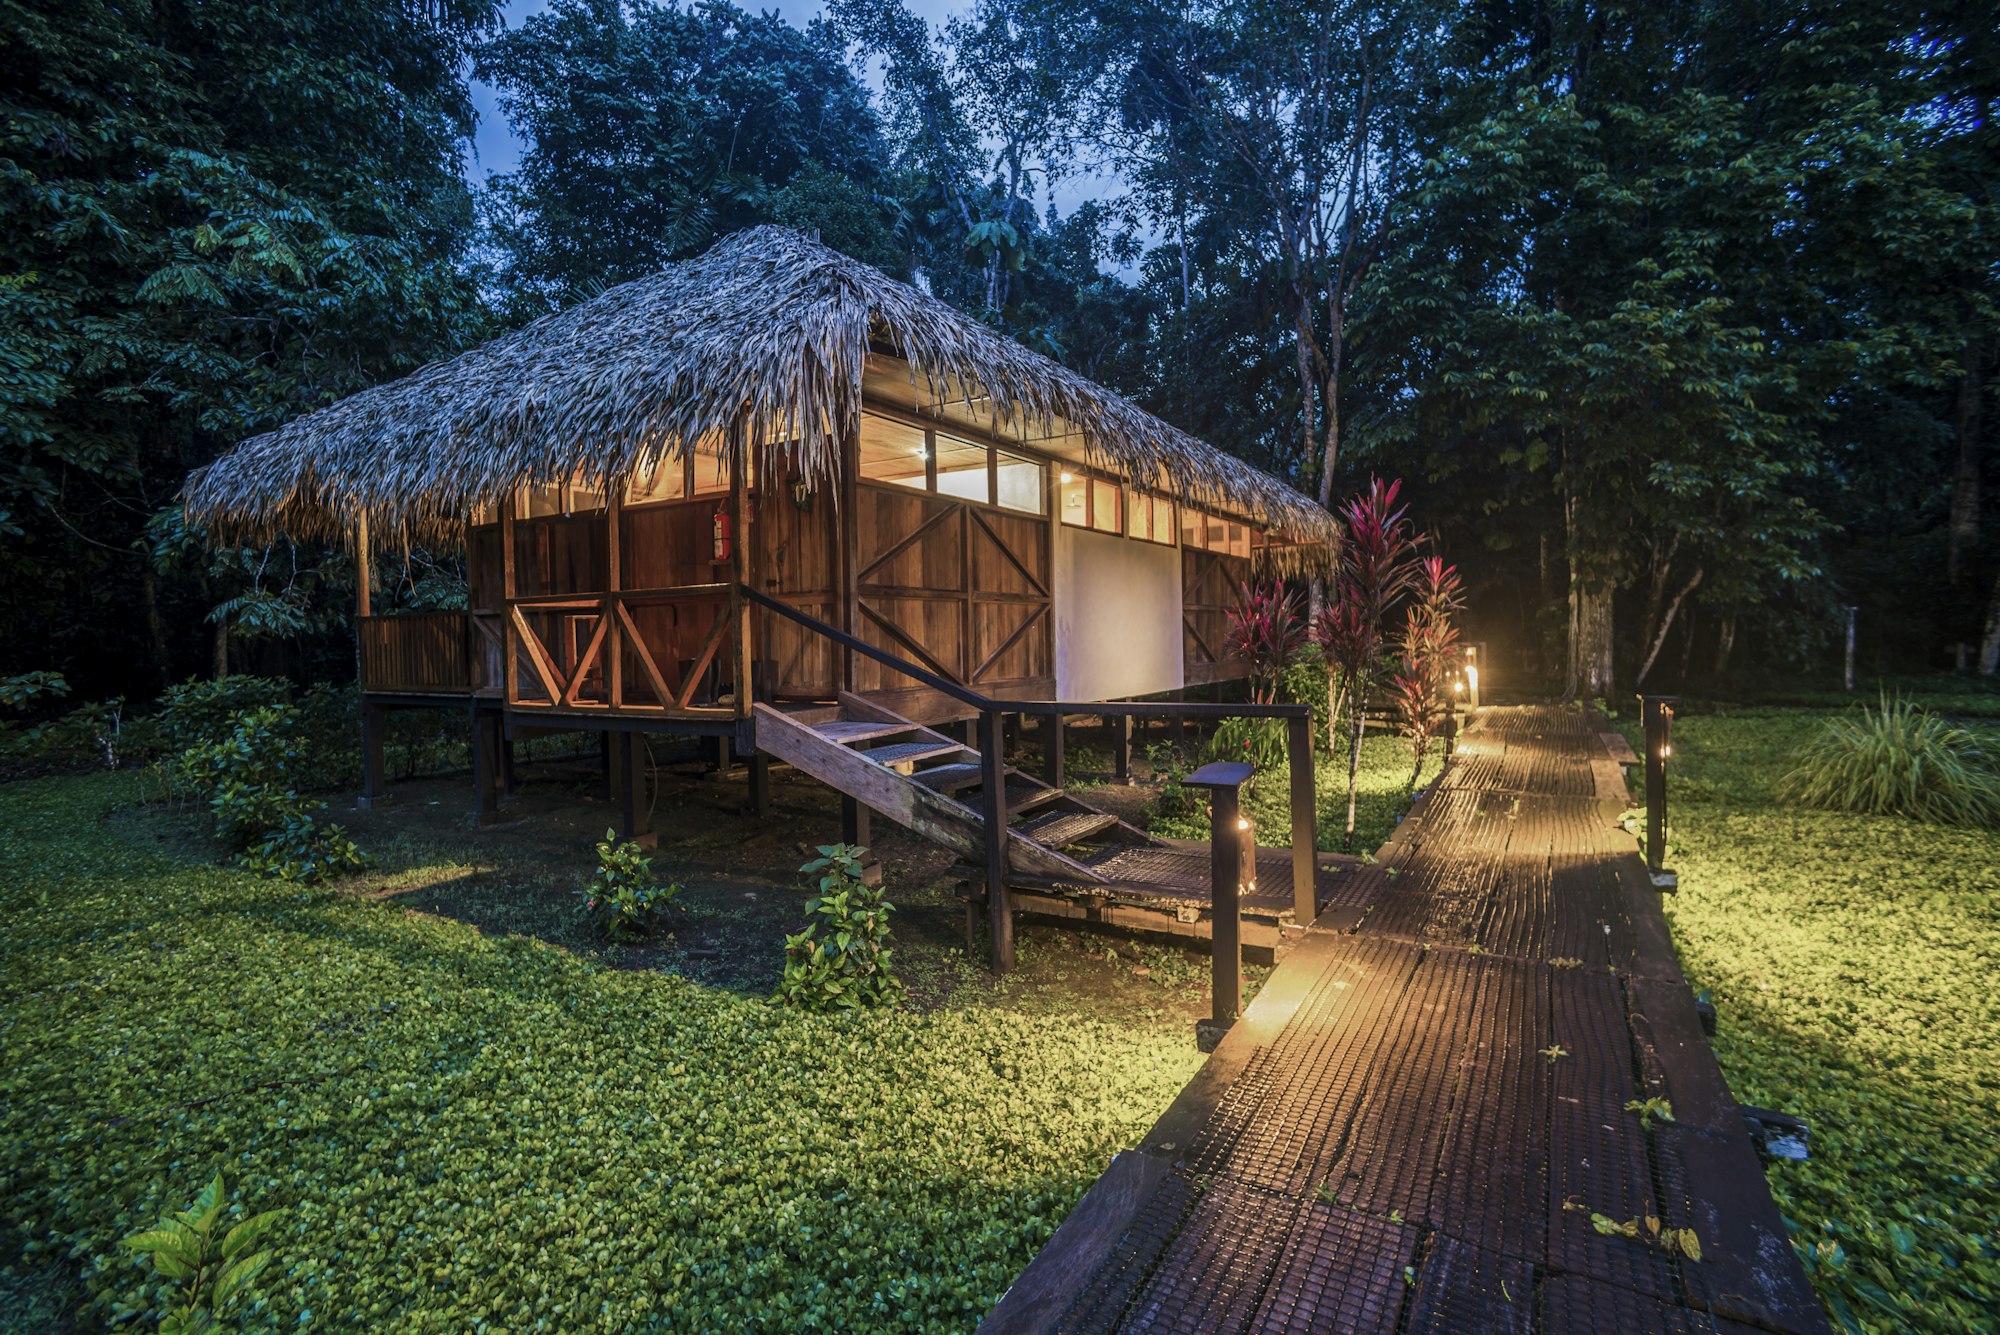 Bedrooms at Sacha Lodge, an Amazon Rainforest lodge near Coca in Euador, South America